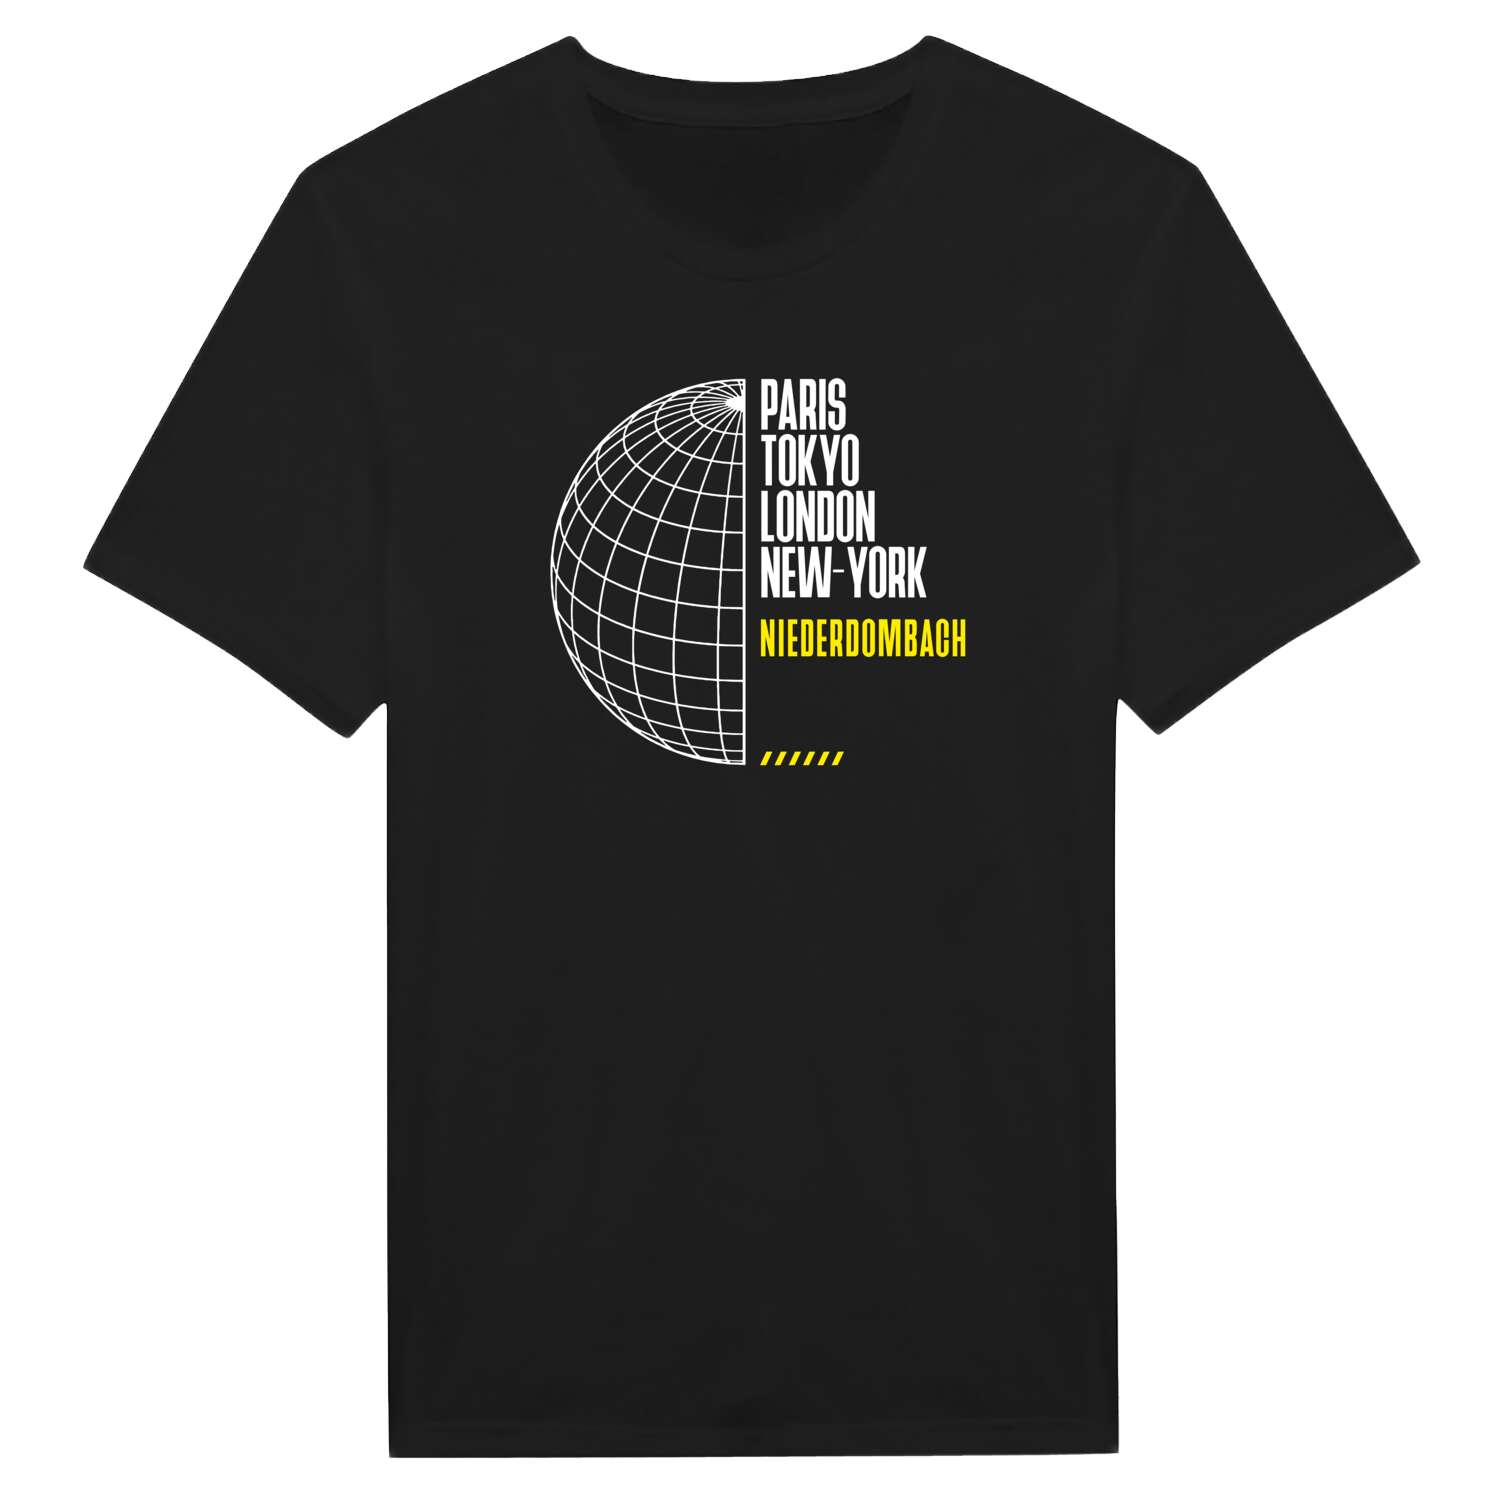 Niederdombach T-Shirt »Paris Tokyo London«